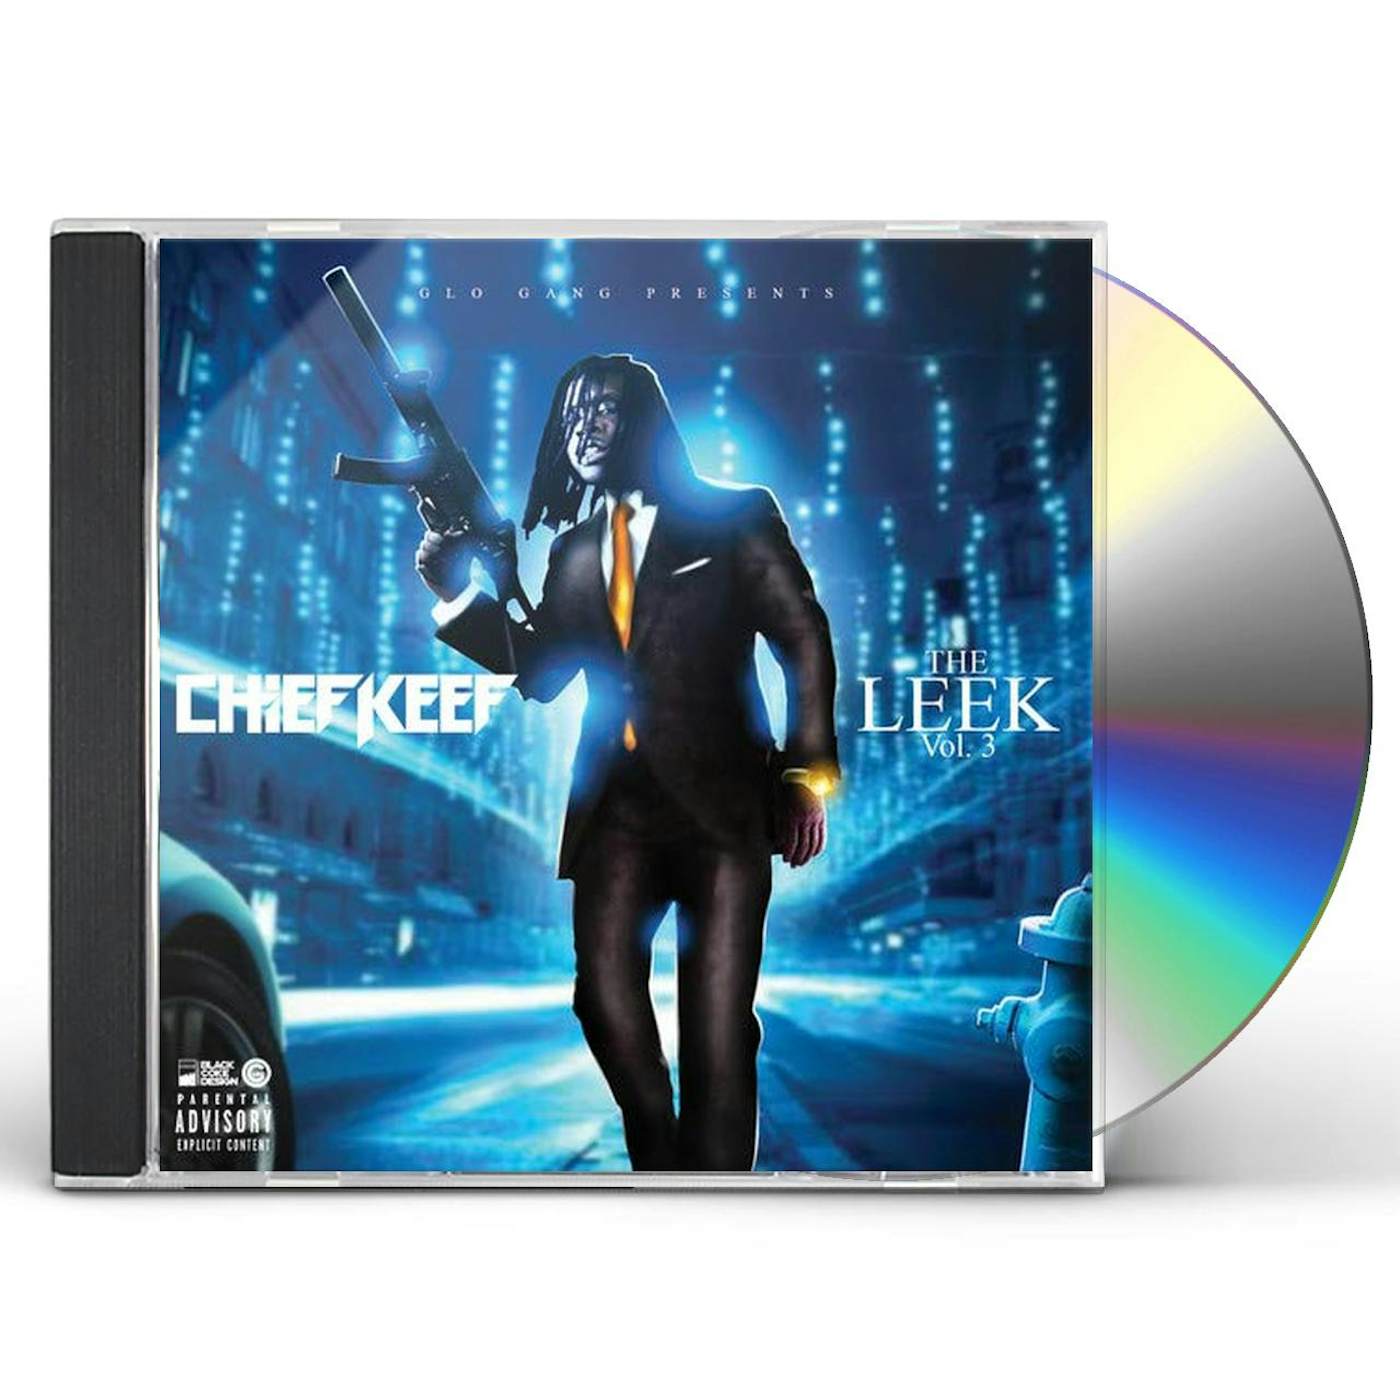 Chief Keef LEEK VOL. 3 CD